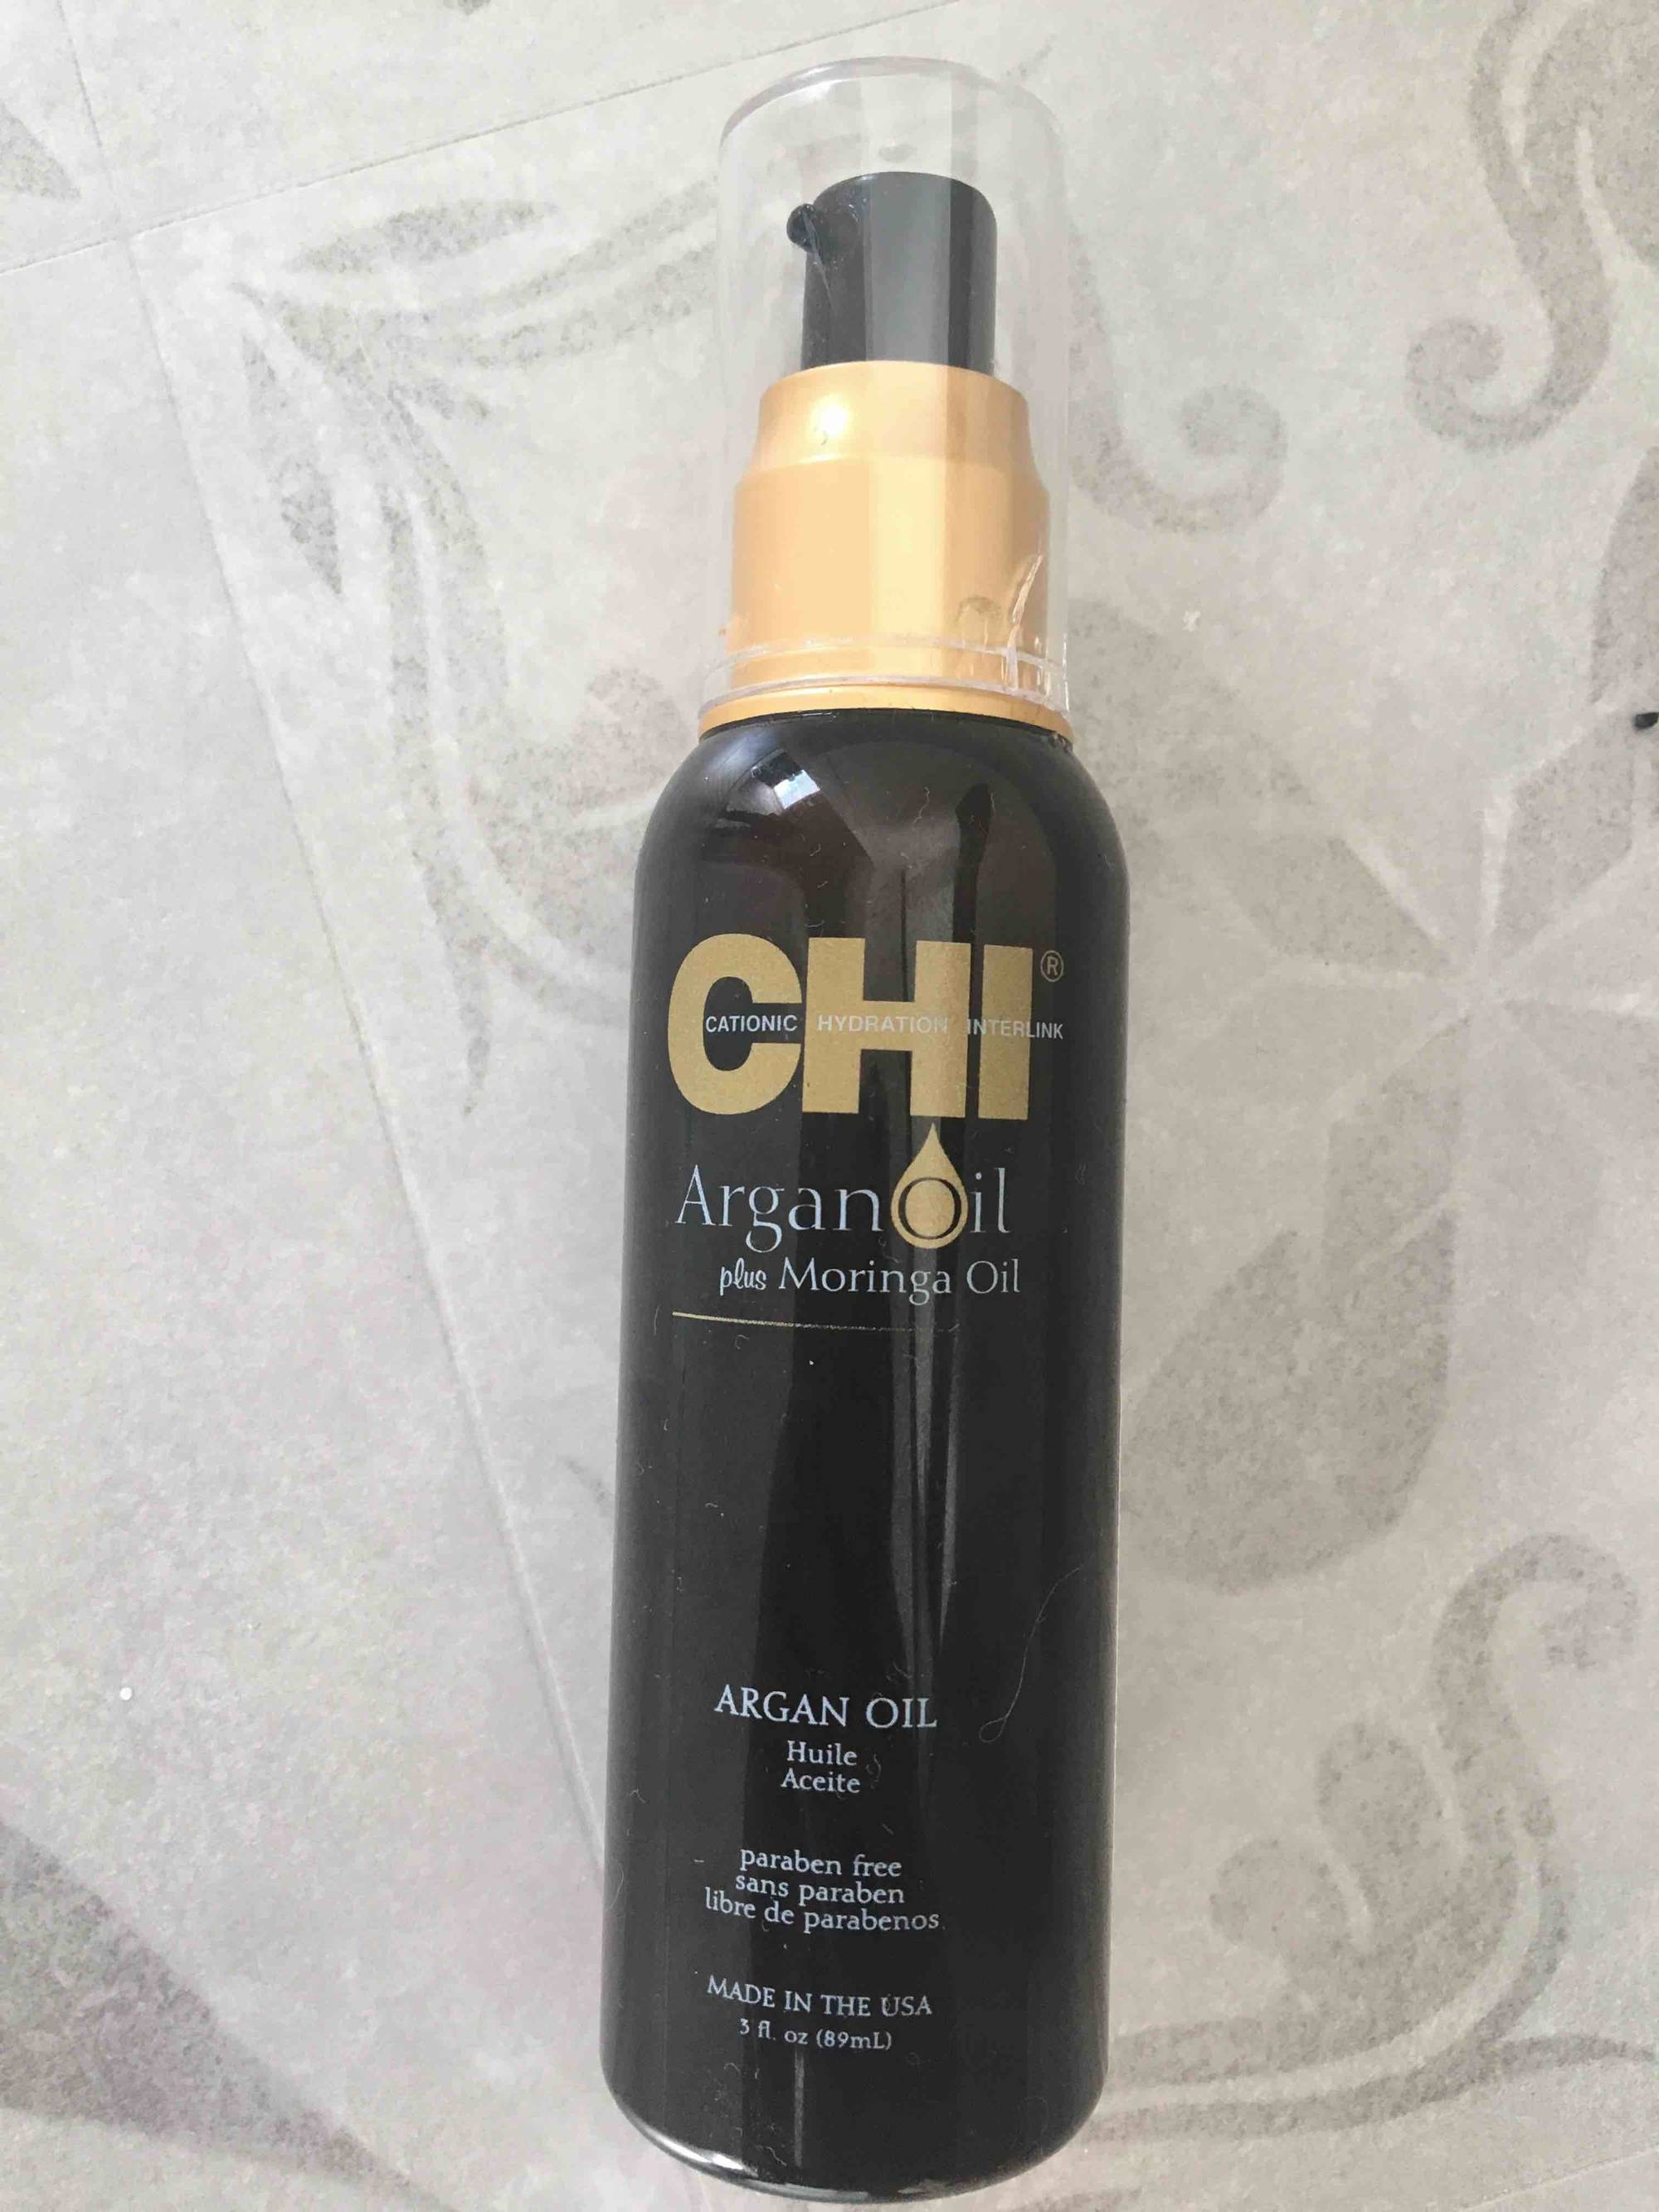 CHI - Argan oil plus moringa oil 